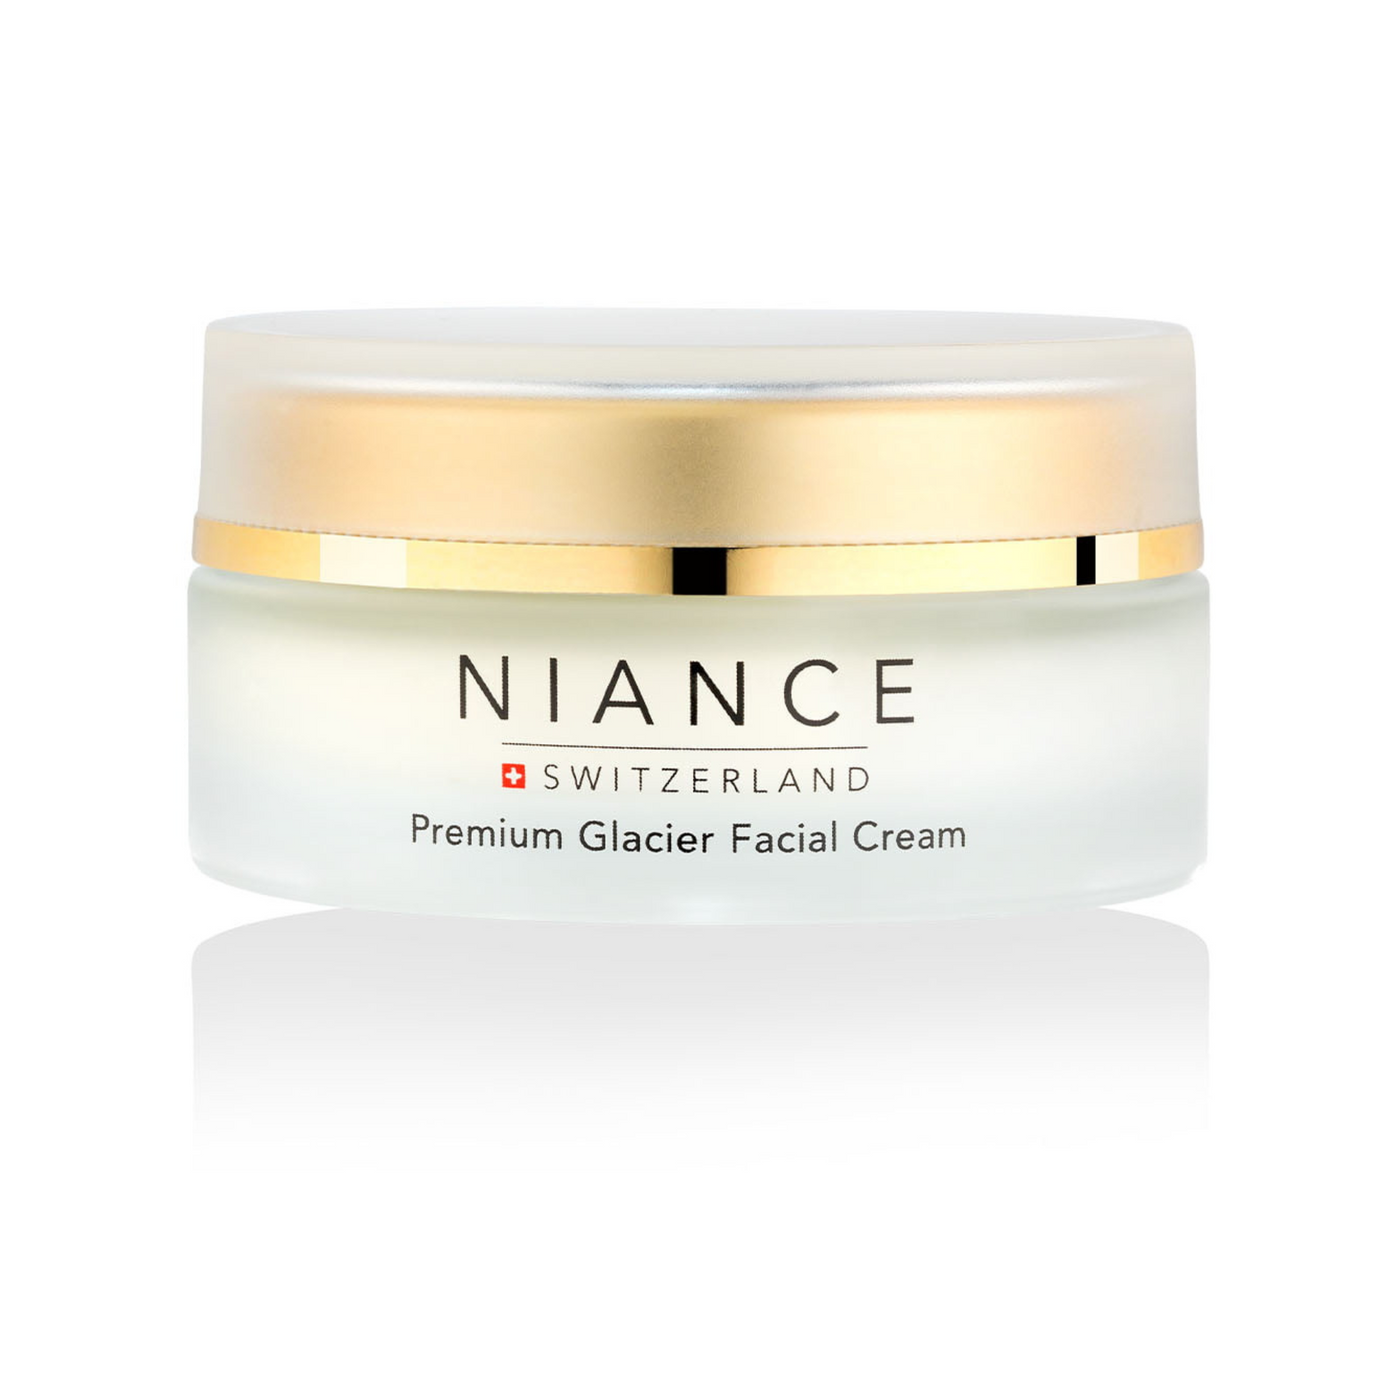 Premium Glacier Facial Cream